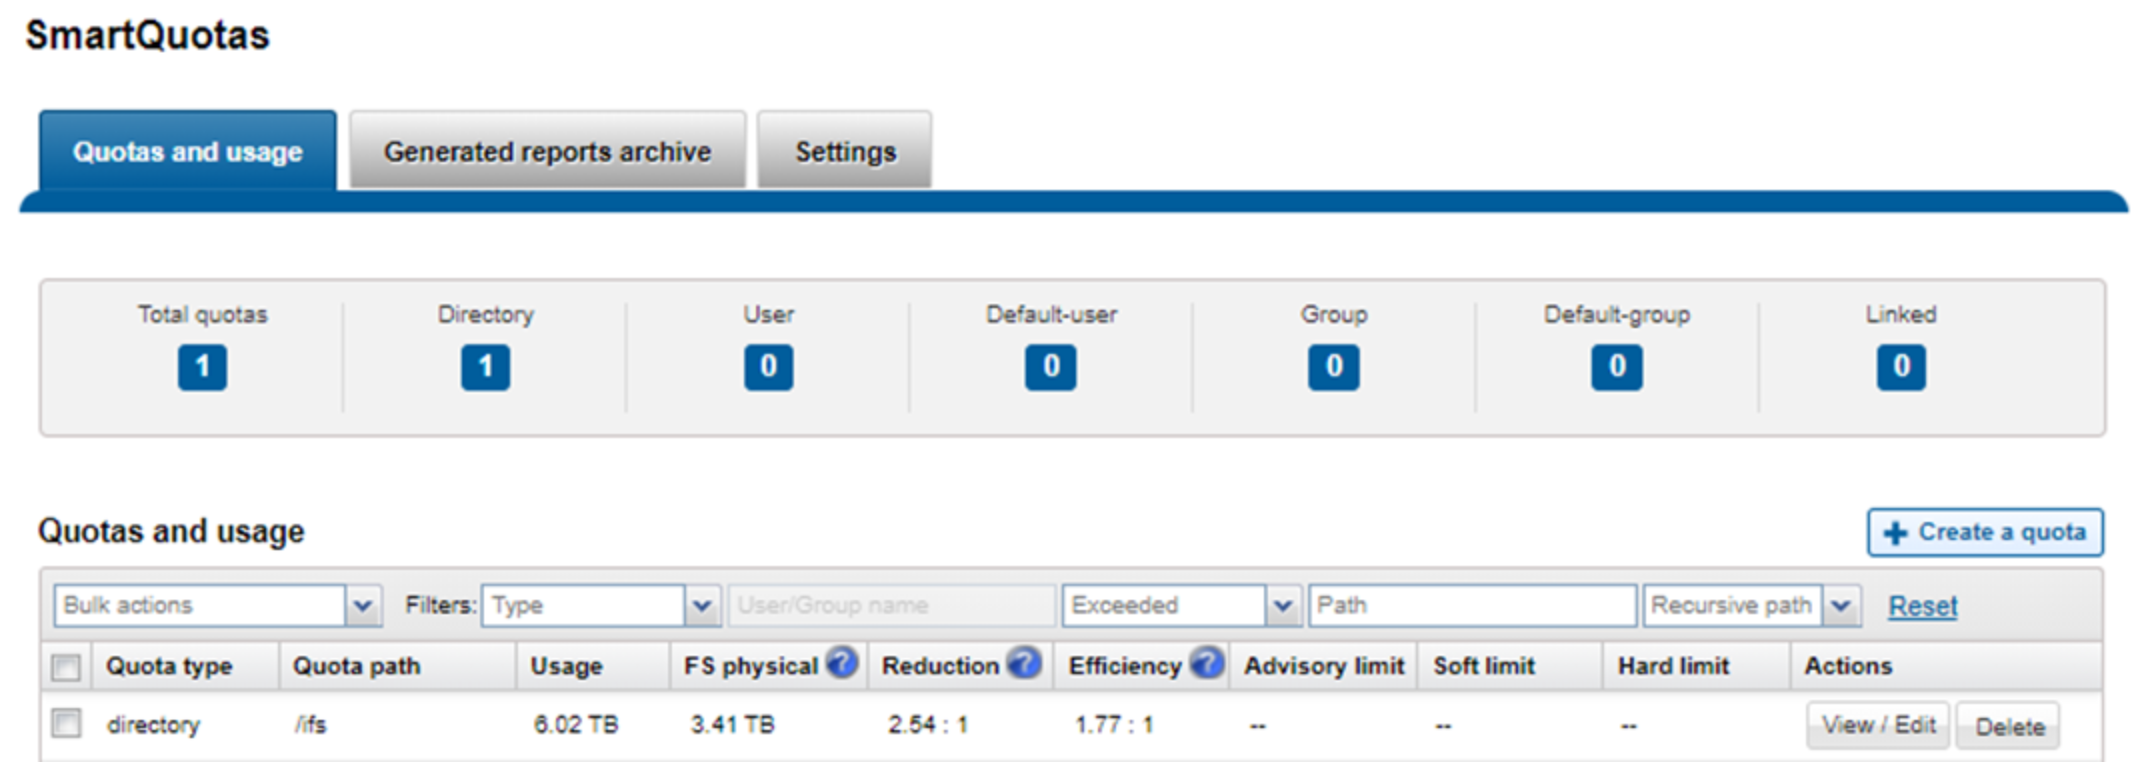 OneFS WebUI SmartQuotas Quotas and Usage Status screenshot detailing Data Reduction and Efficiency Ratios.